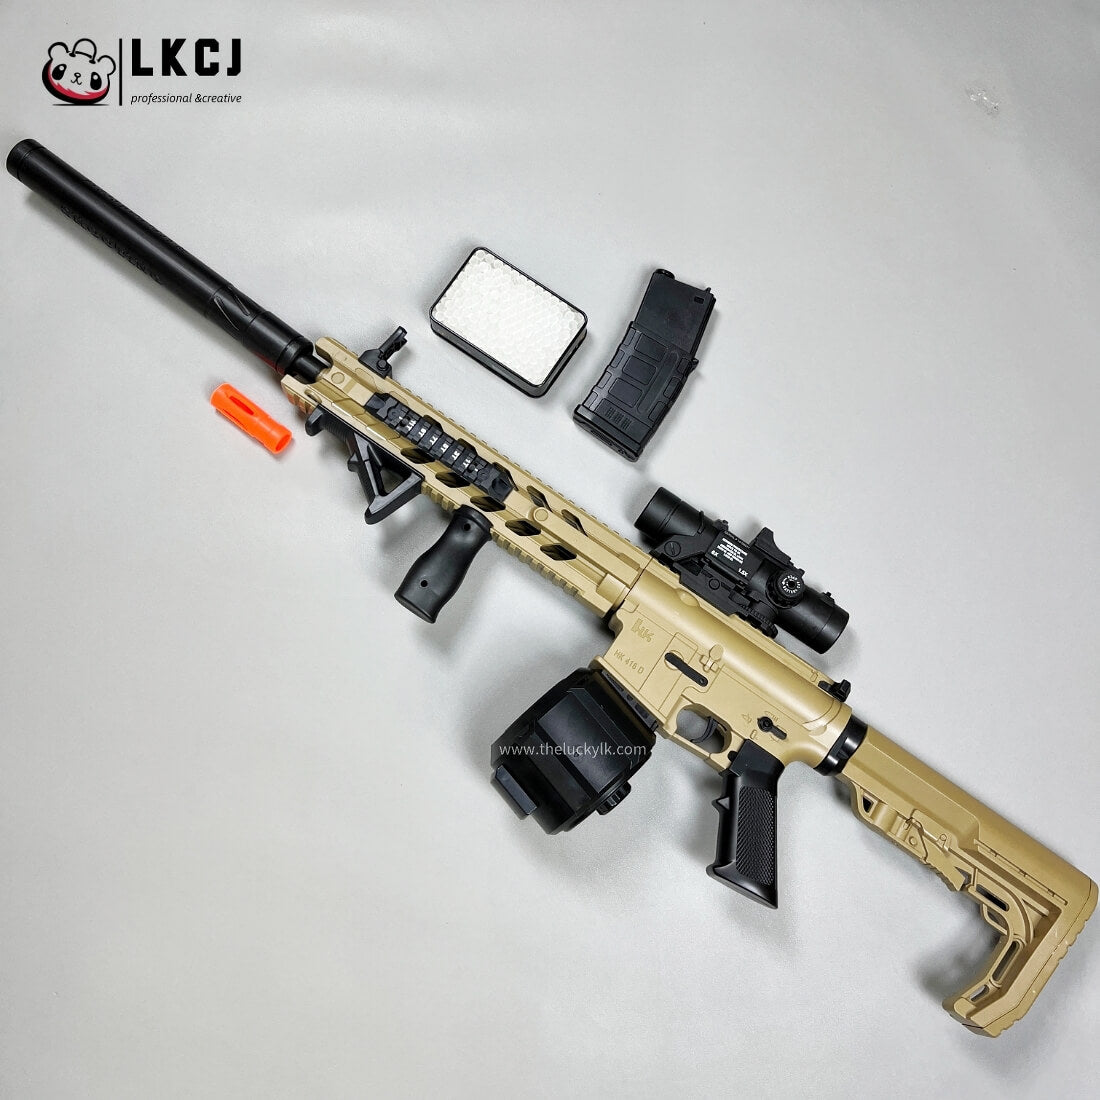 HK416D-Viper Gel Blasters 25M Shoot Range With 2 Mags